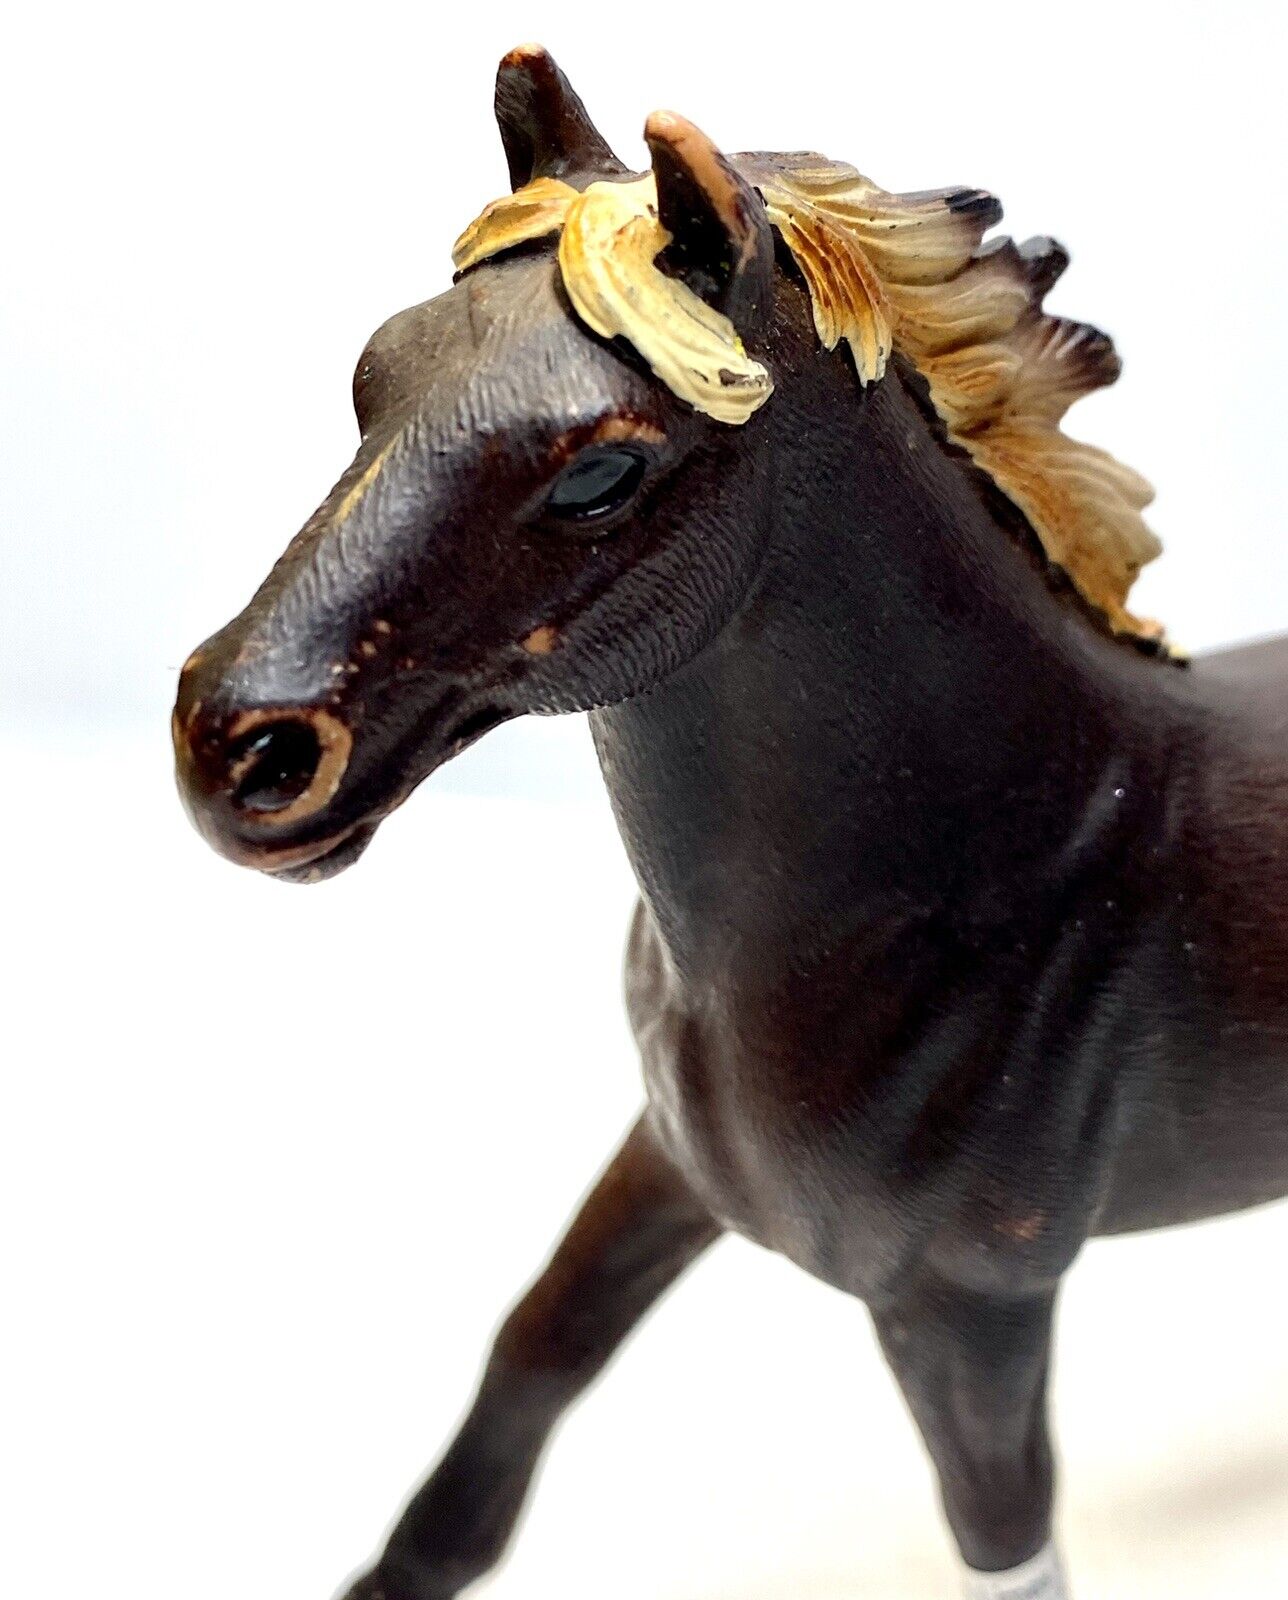 Schleich Running Mustang Stallion Horse Animal Figure #73527 AM Limes 69 4” tall